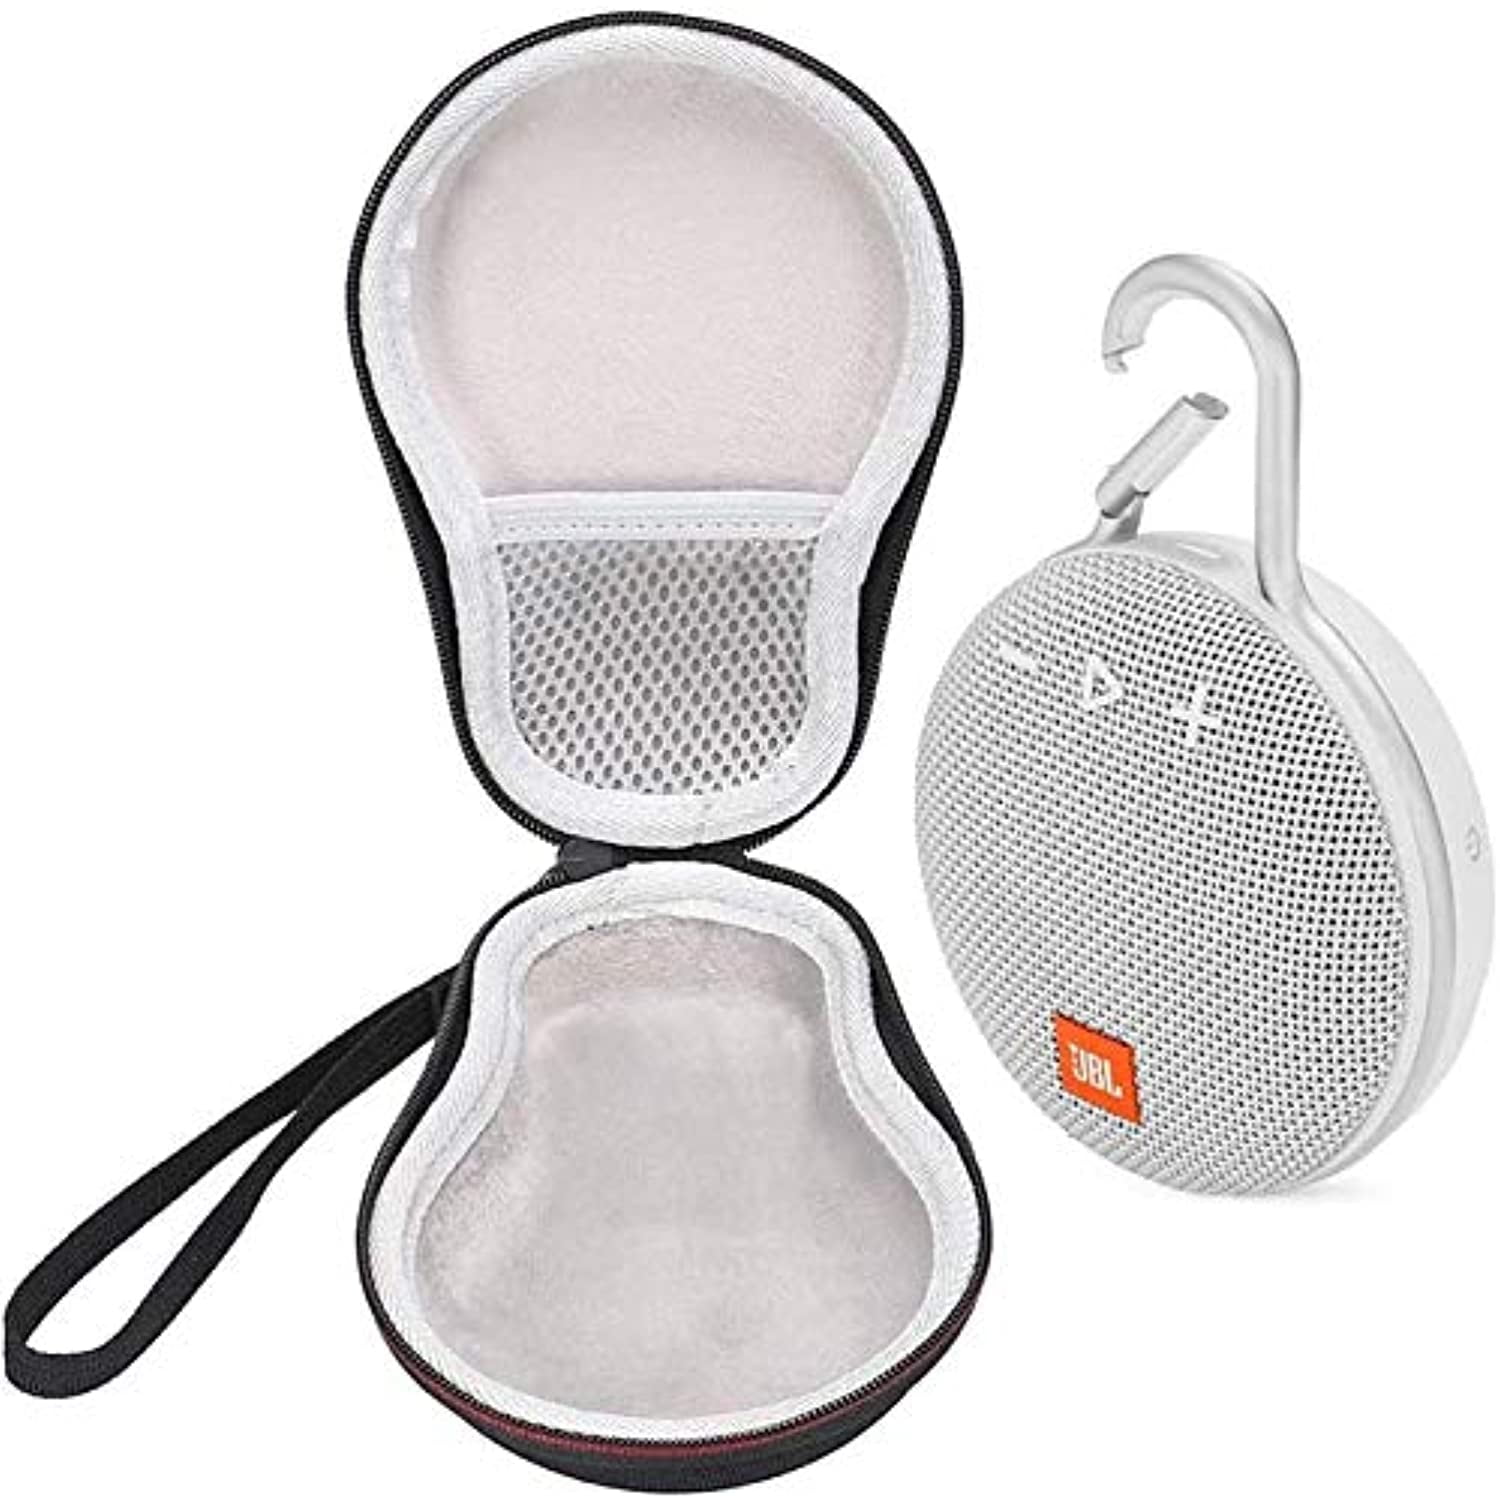 Clip 3 Portable Bluetooth Speaker Carabiner, Black - Walmart.com